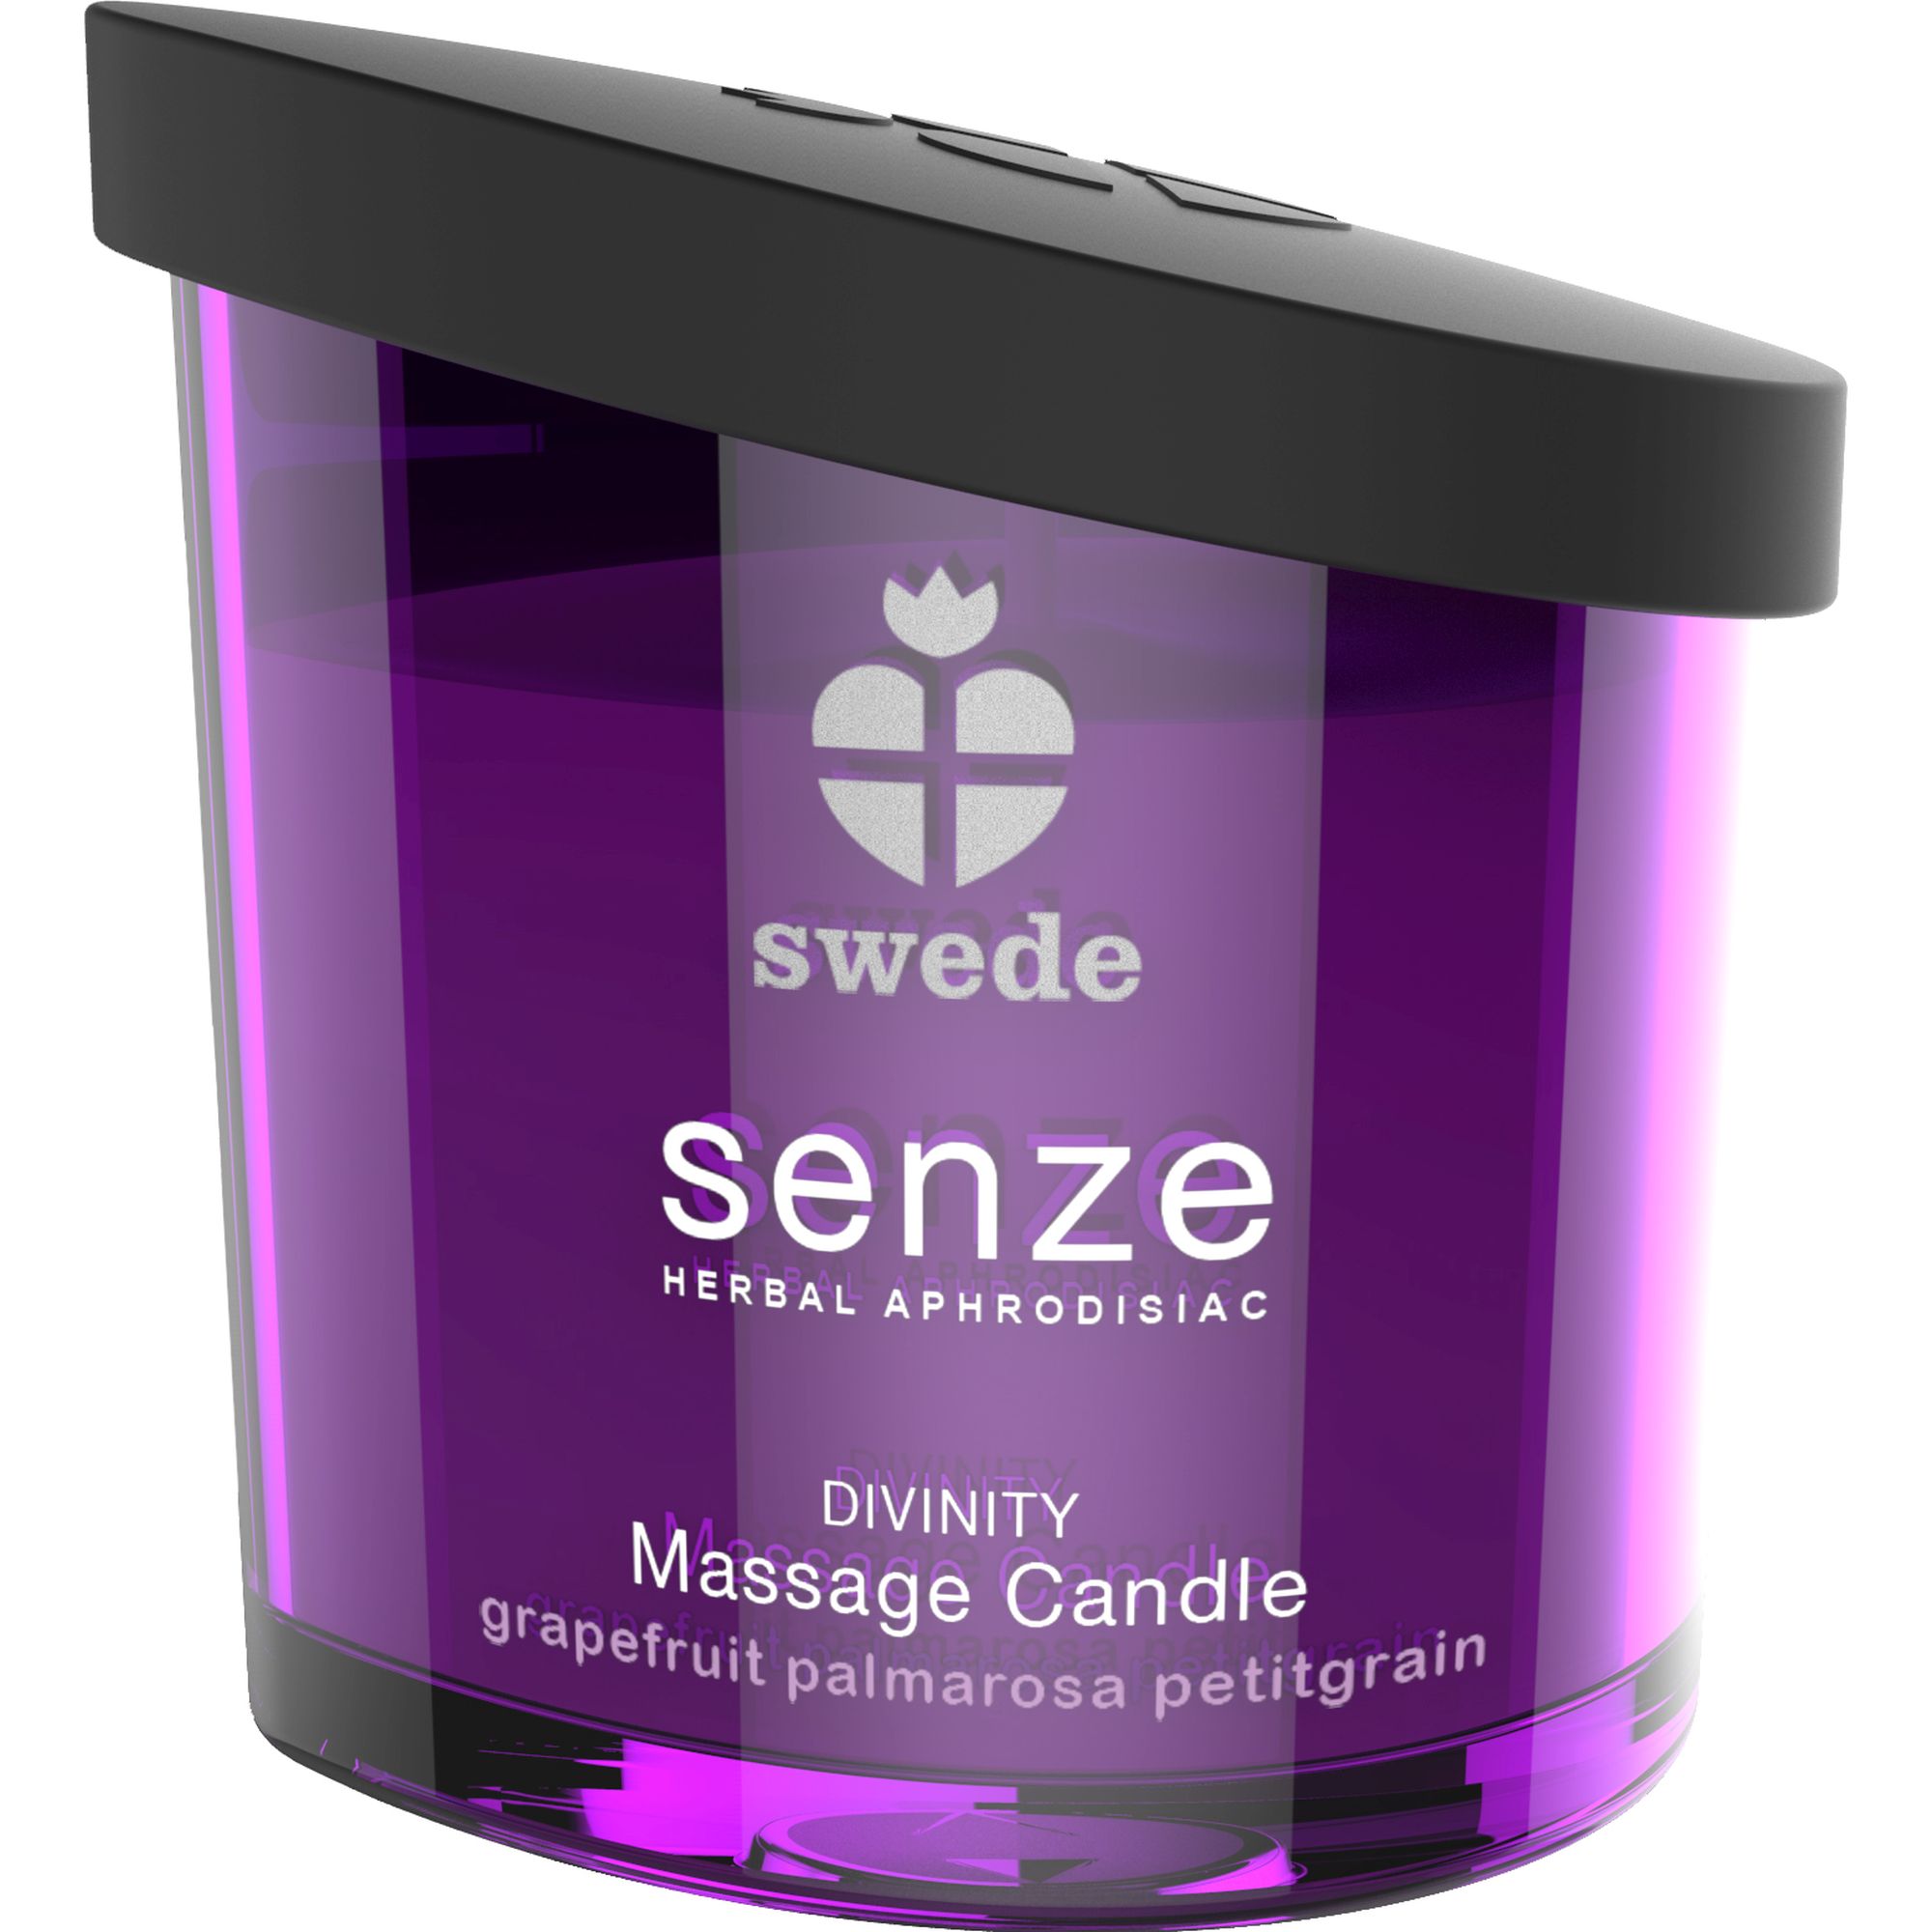 Swede – Senze Divinity Massage Candle Grapefruit Palmarosa Petitgrain